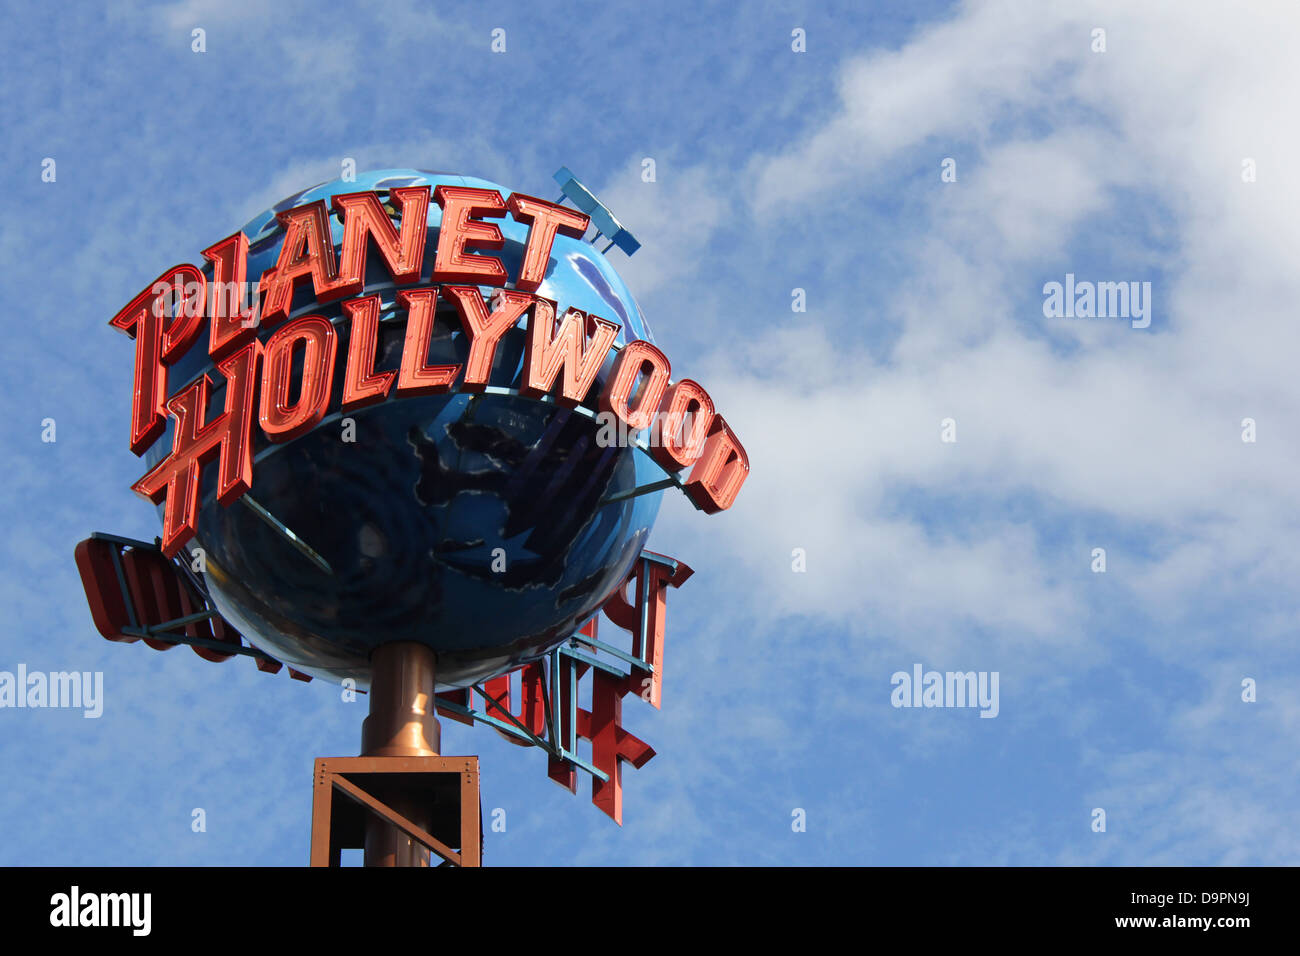 Planet Hollywood franchise at Downtown Disney, Orlando, Florida. Stock Photo